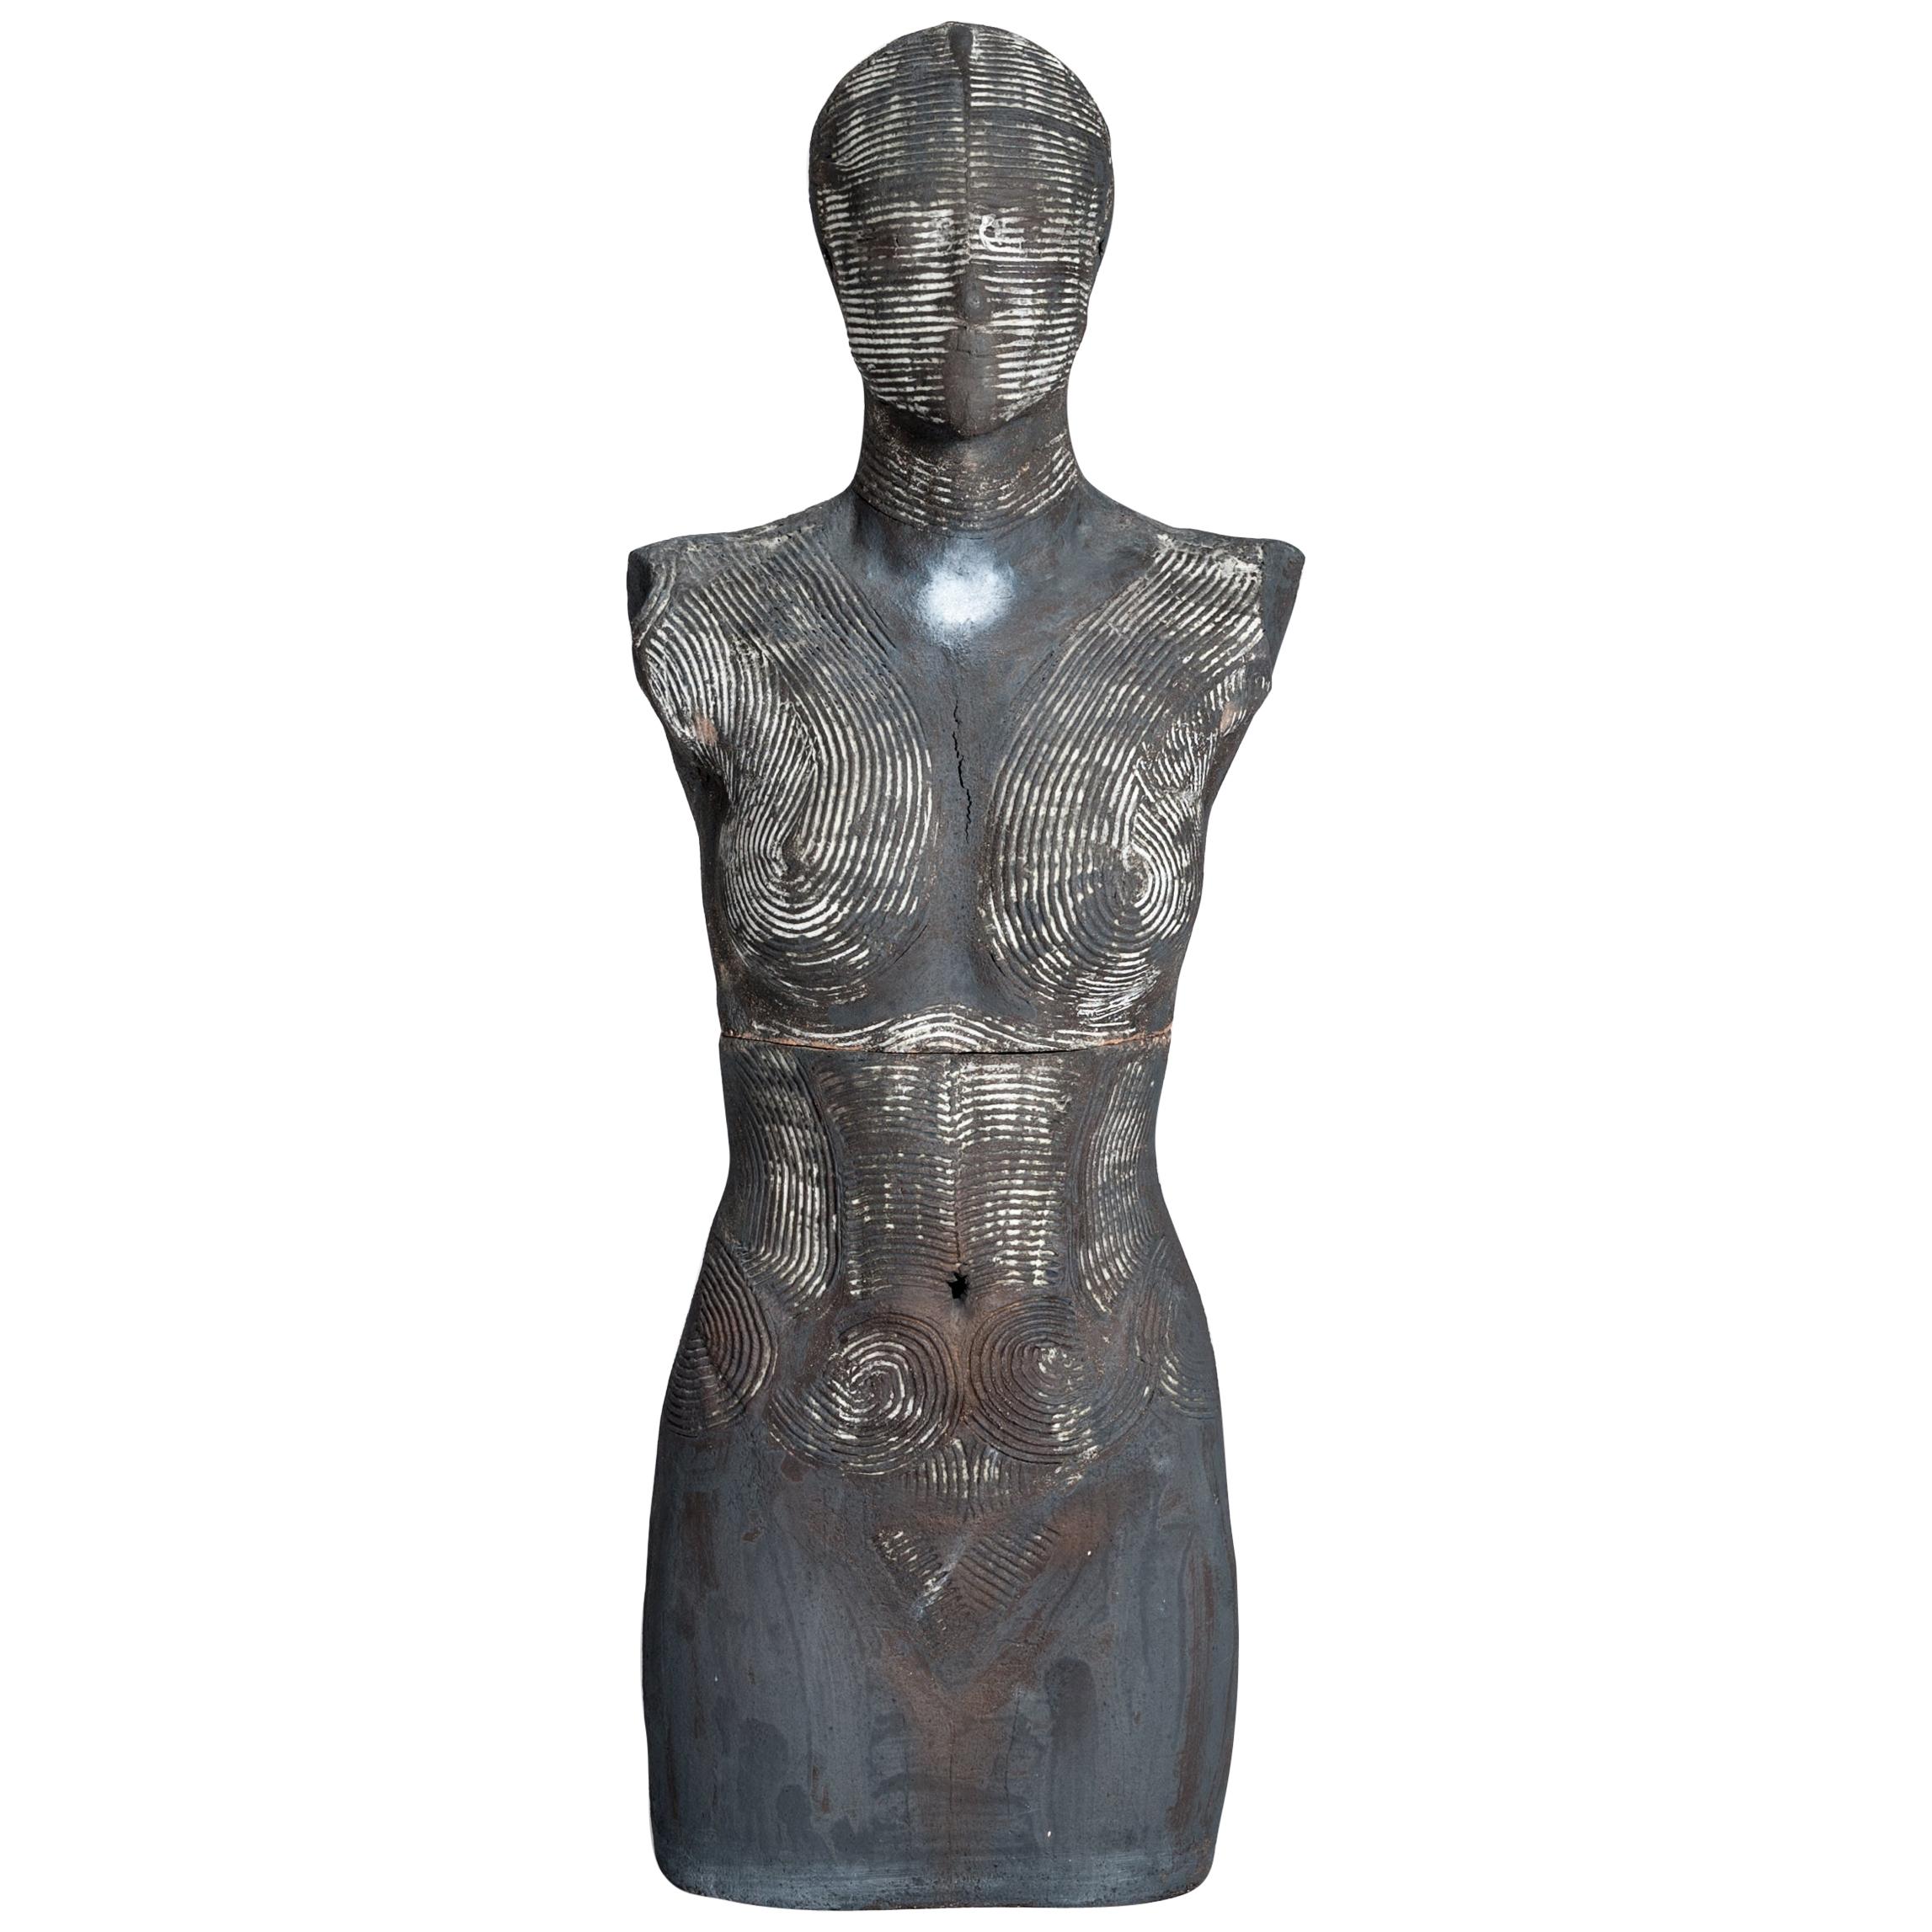 Contemporary Ceramic Grey Figural Female Sculpture or Torso by Dora Várkonyi